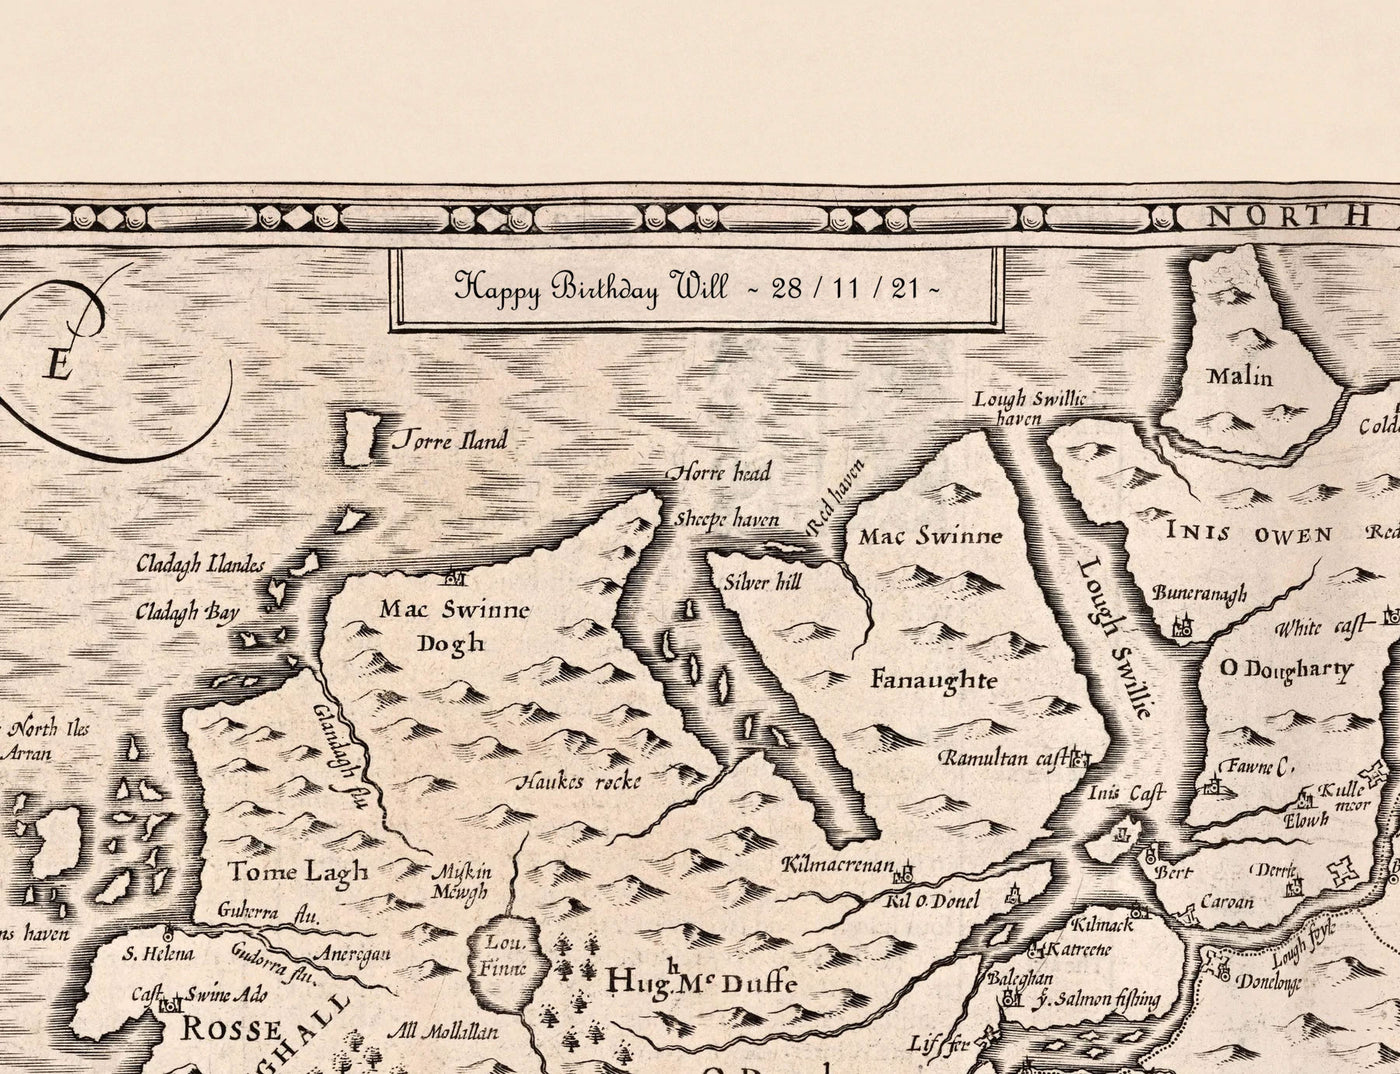 Old Map of North East London in 1746 by John Rocque - Wanstead, Walthamstow, Leyton, Aldersbrook, Woodford, E7, E9, E10, E11, E12, E15